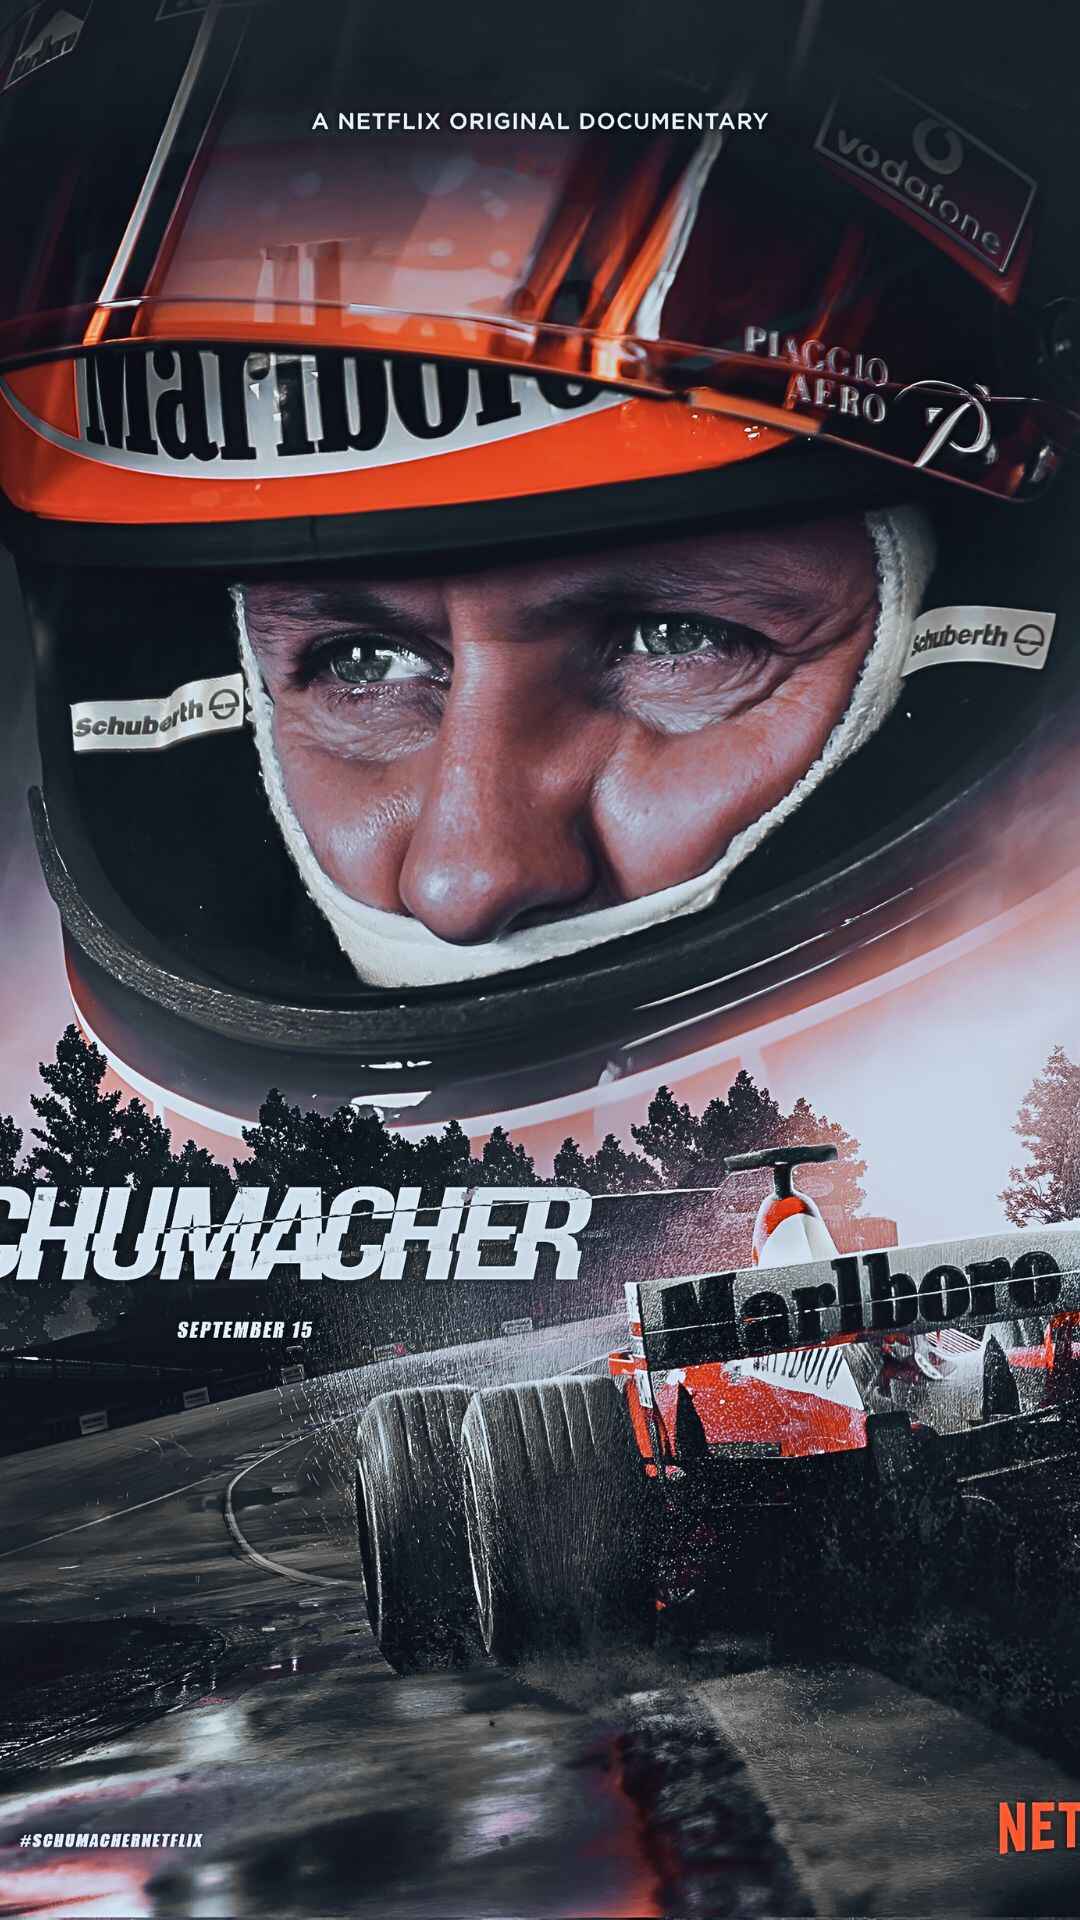 Michael Schumacher Aesthetic Wallpaper